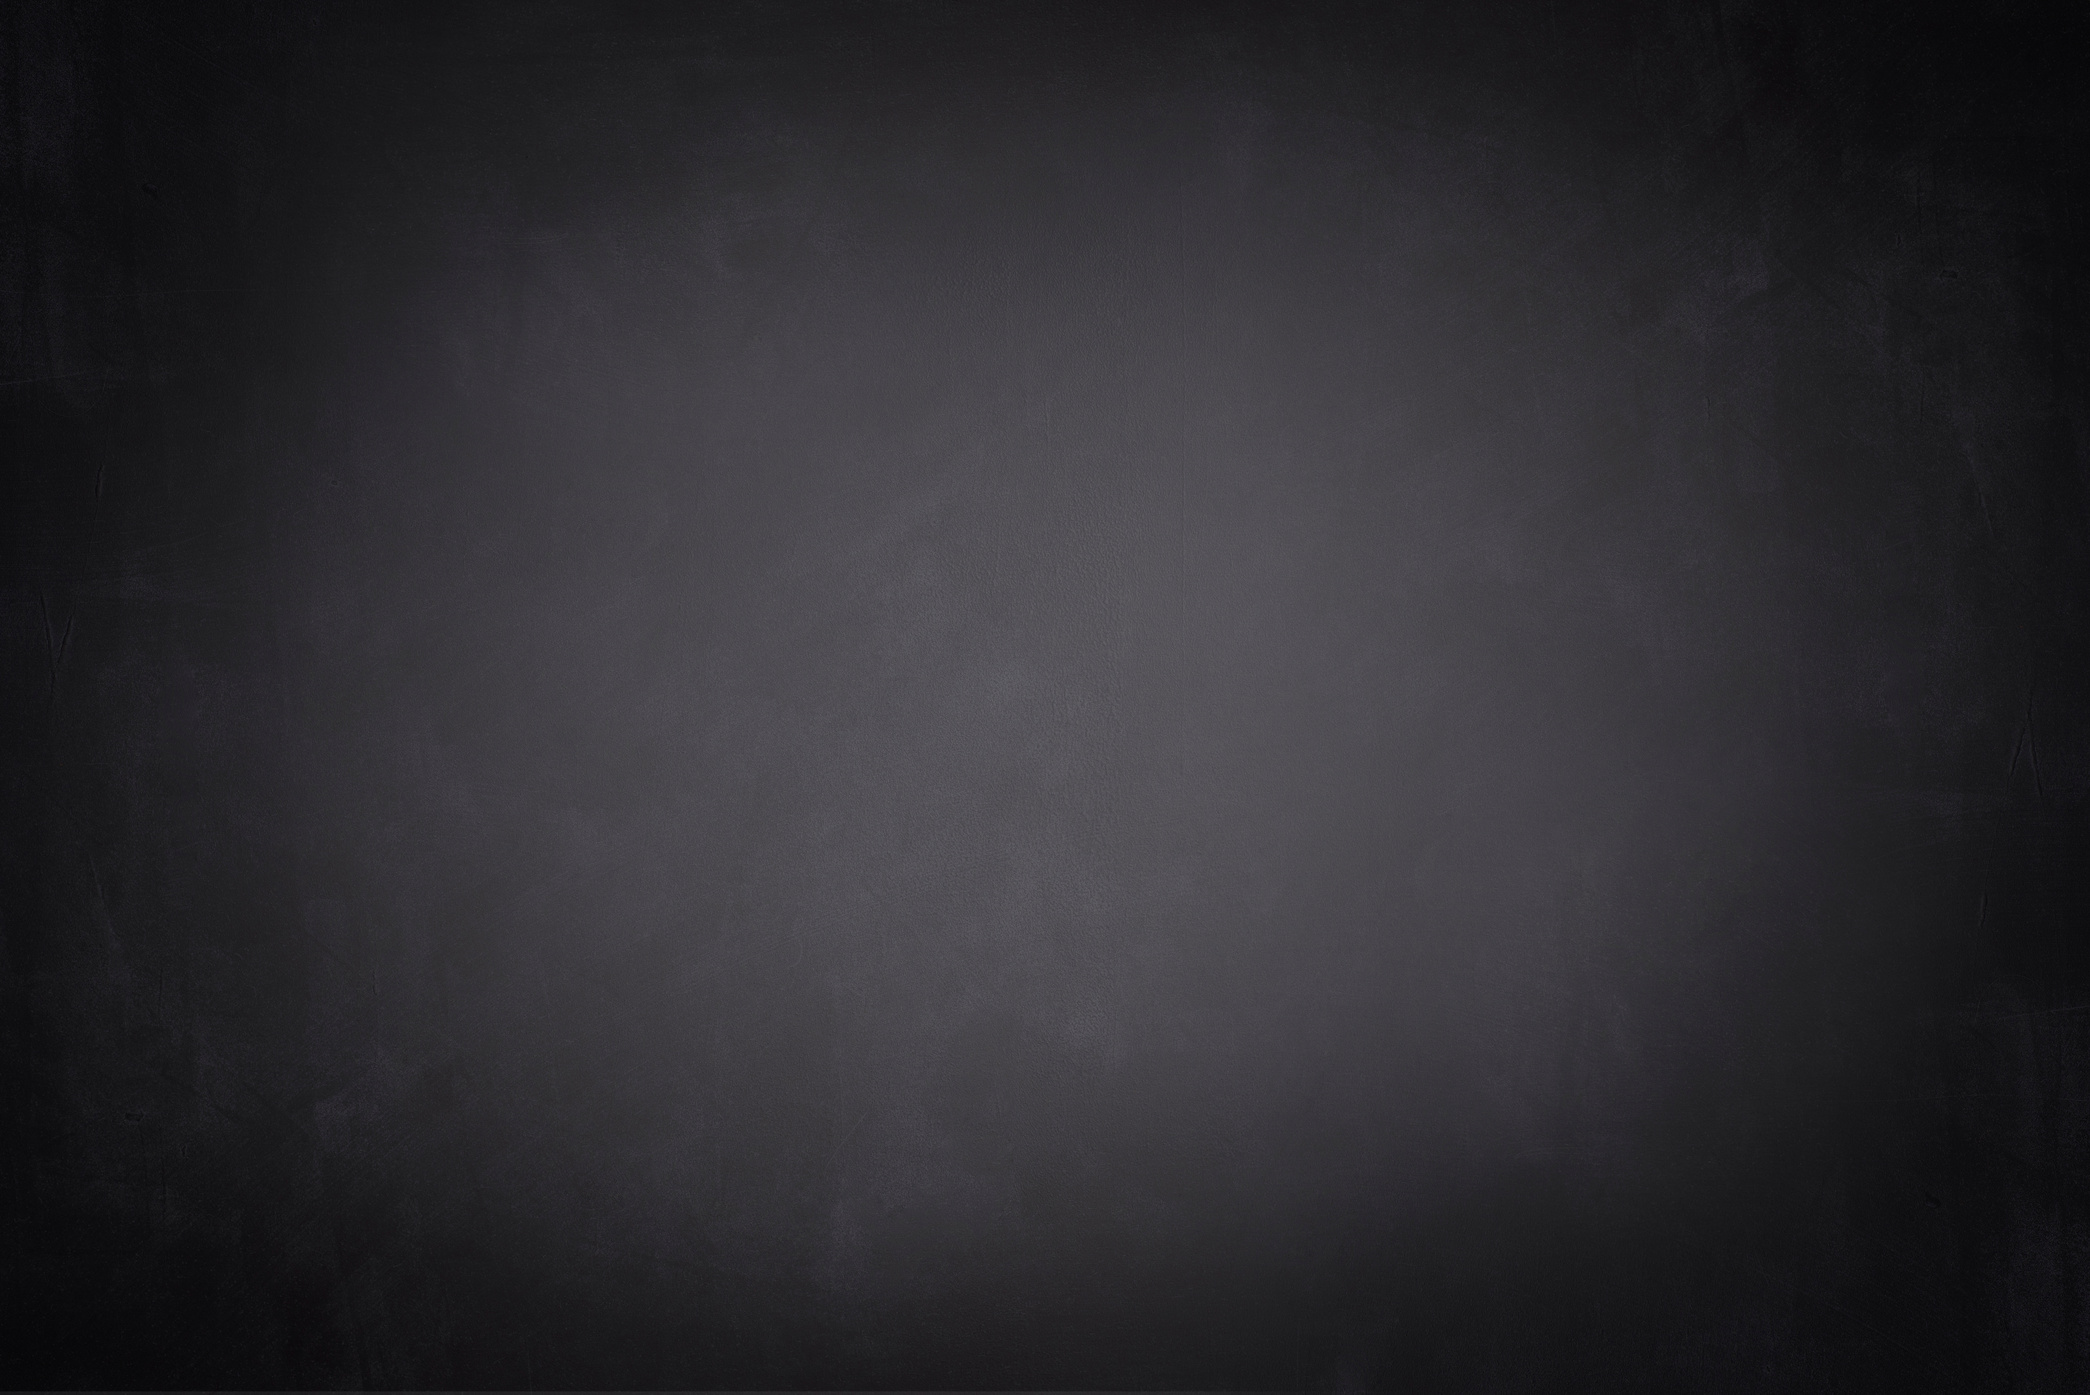 blackboard background gradient